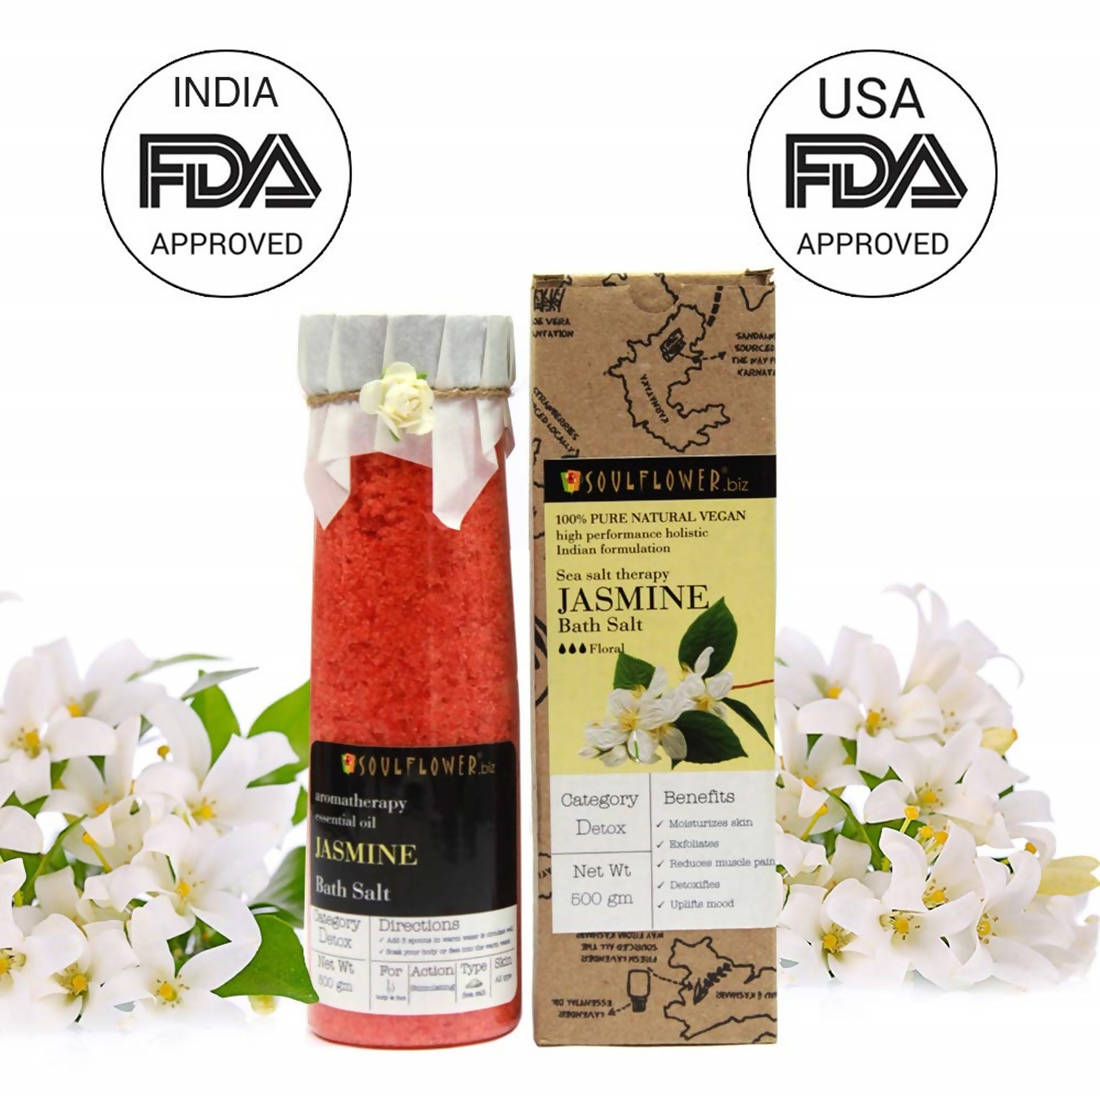 Soulflower Aromatherapy Essential Oil Jasmine Bath Salt uses